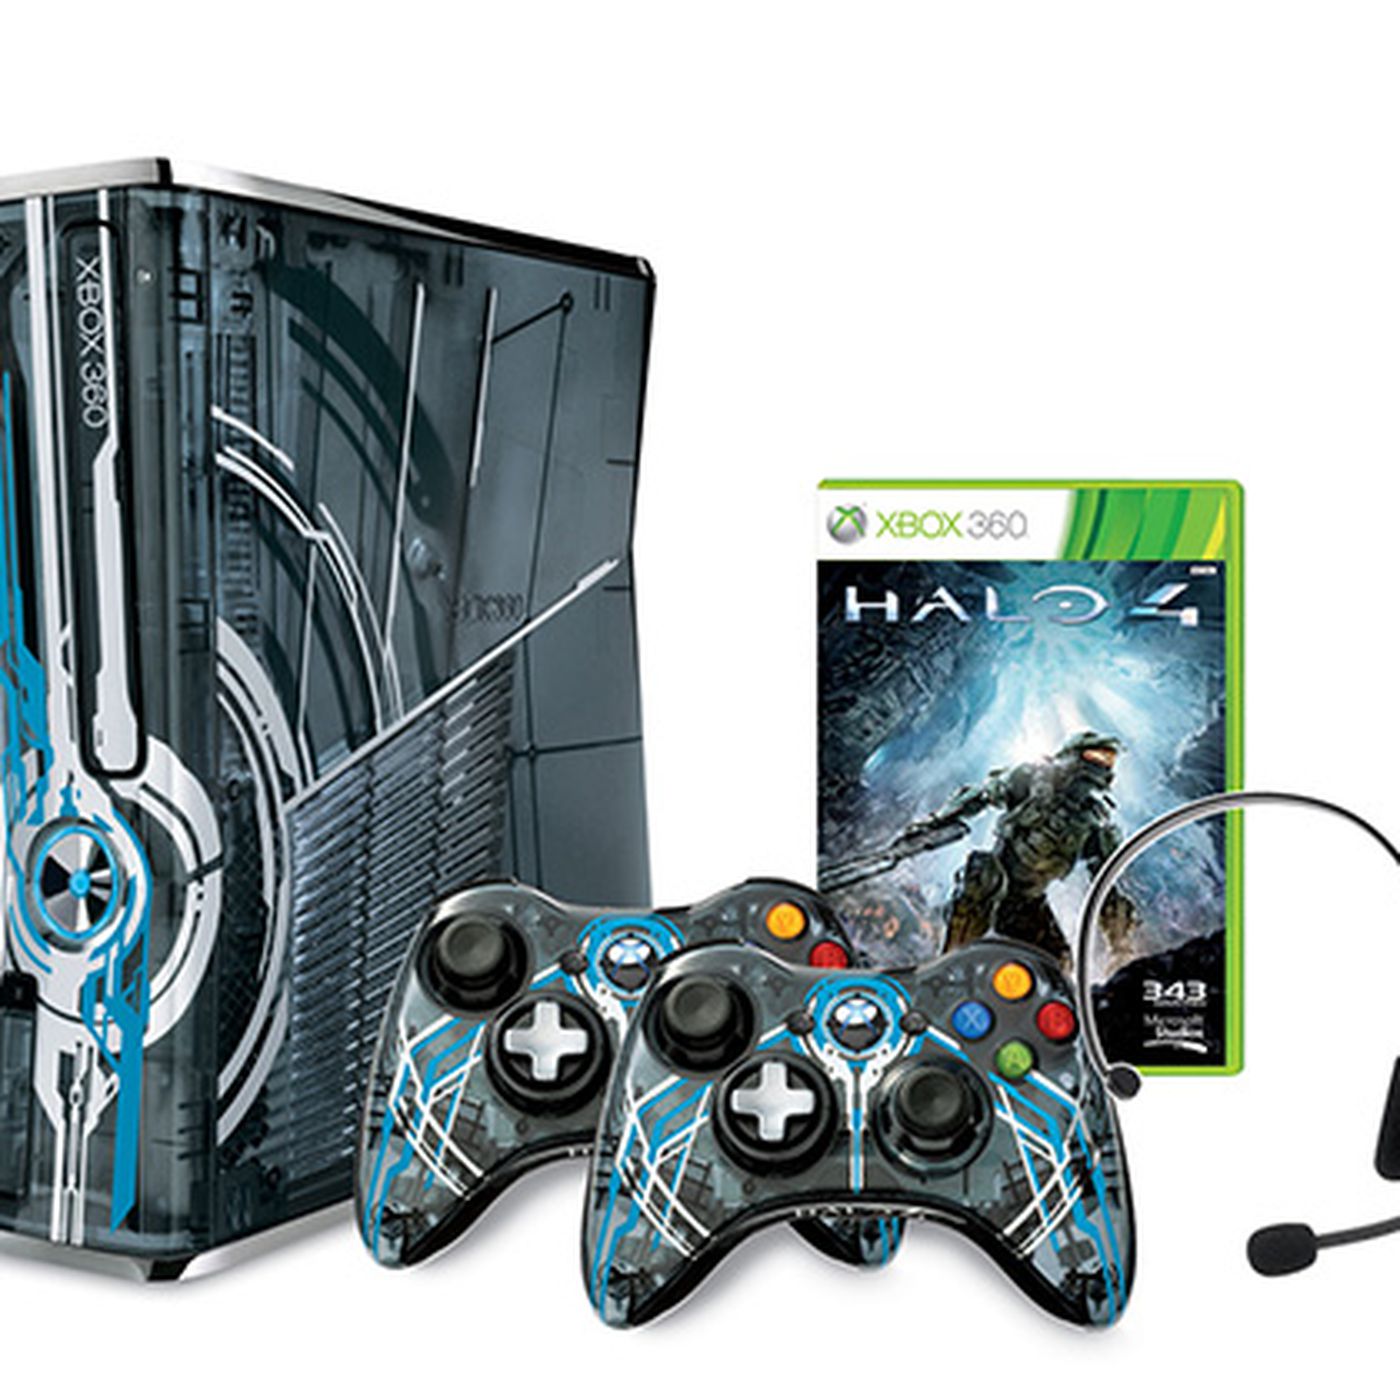 Evenement duidelijkheid kom Halo 4' Limited Edition Xbox 360 bundle hits Nov. 6th for $399.99 - Polygon